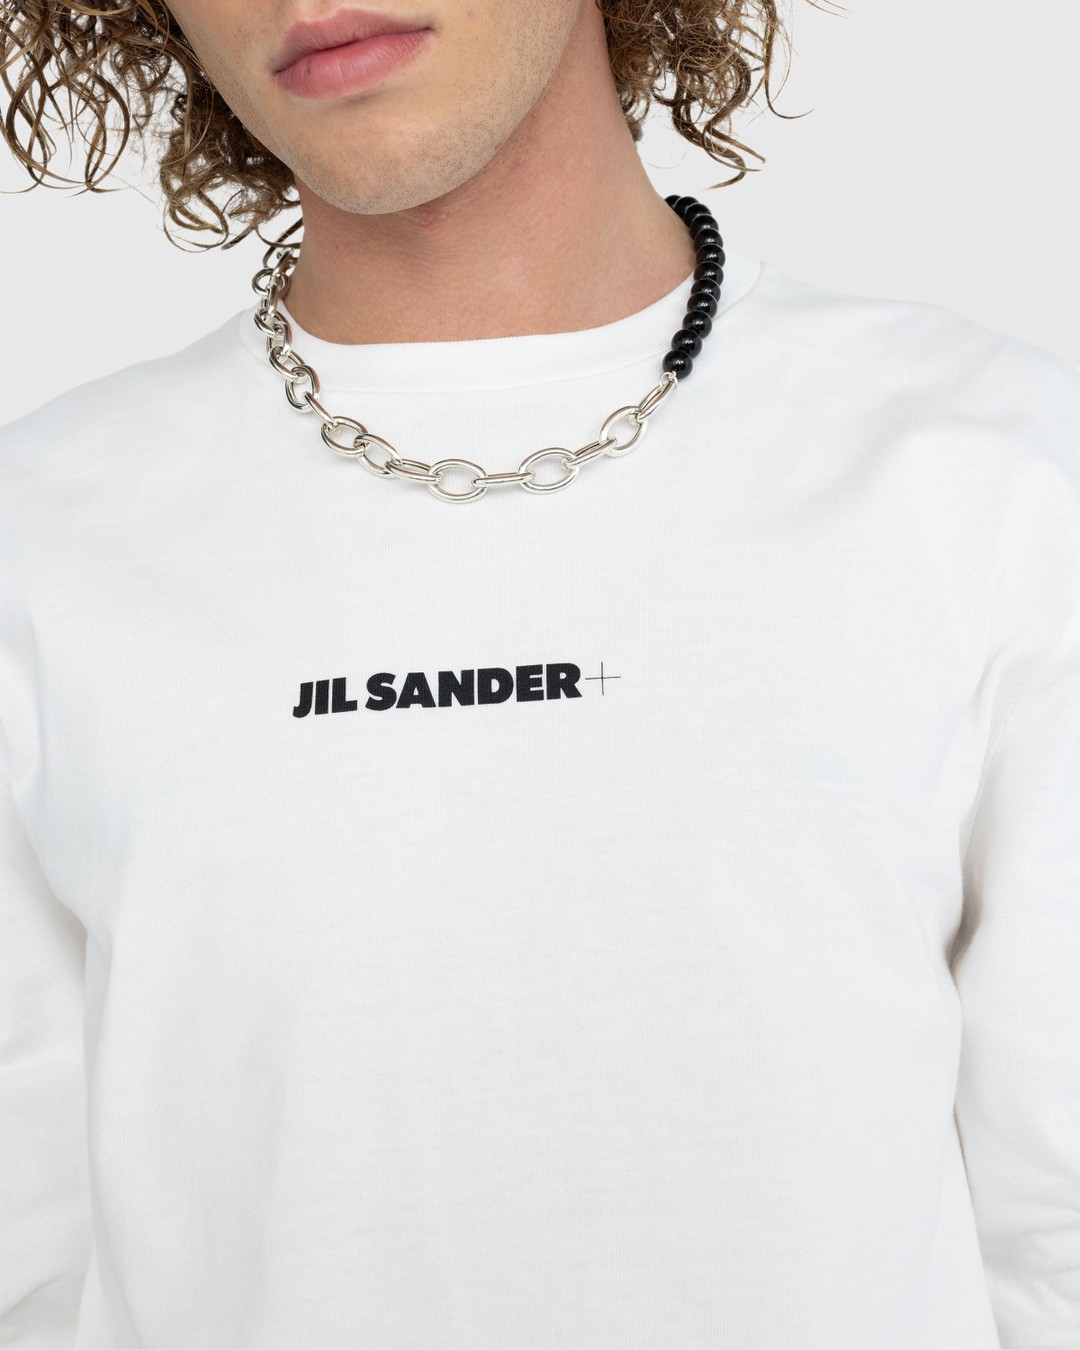 Jil Sander – Solidity Necklace 4 Silver/Black - Jewelry - Multi - Image 4